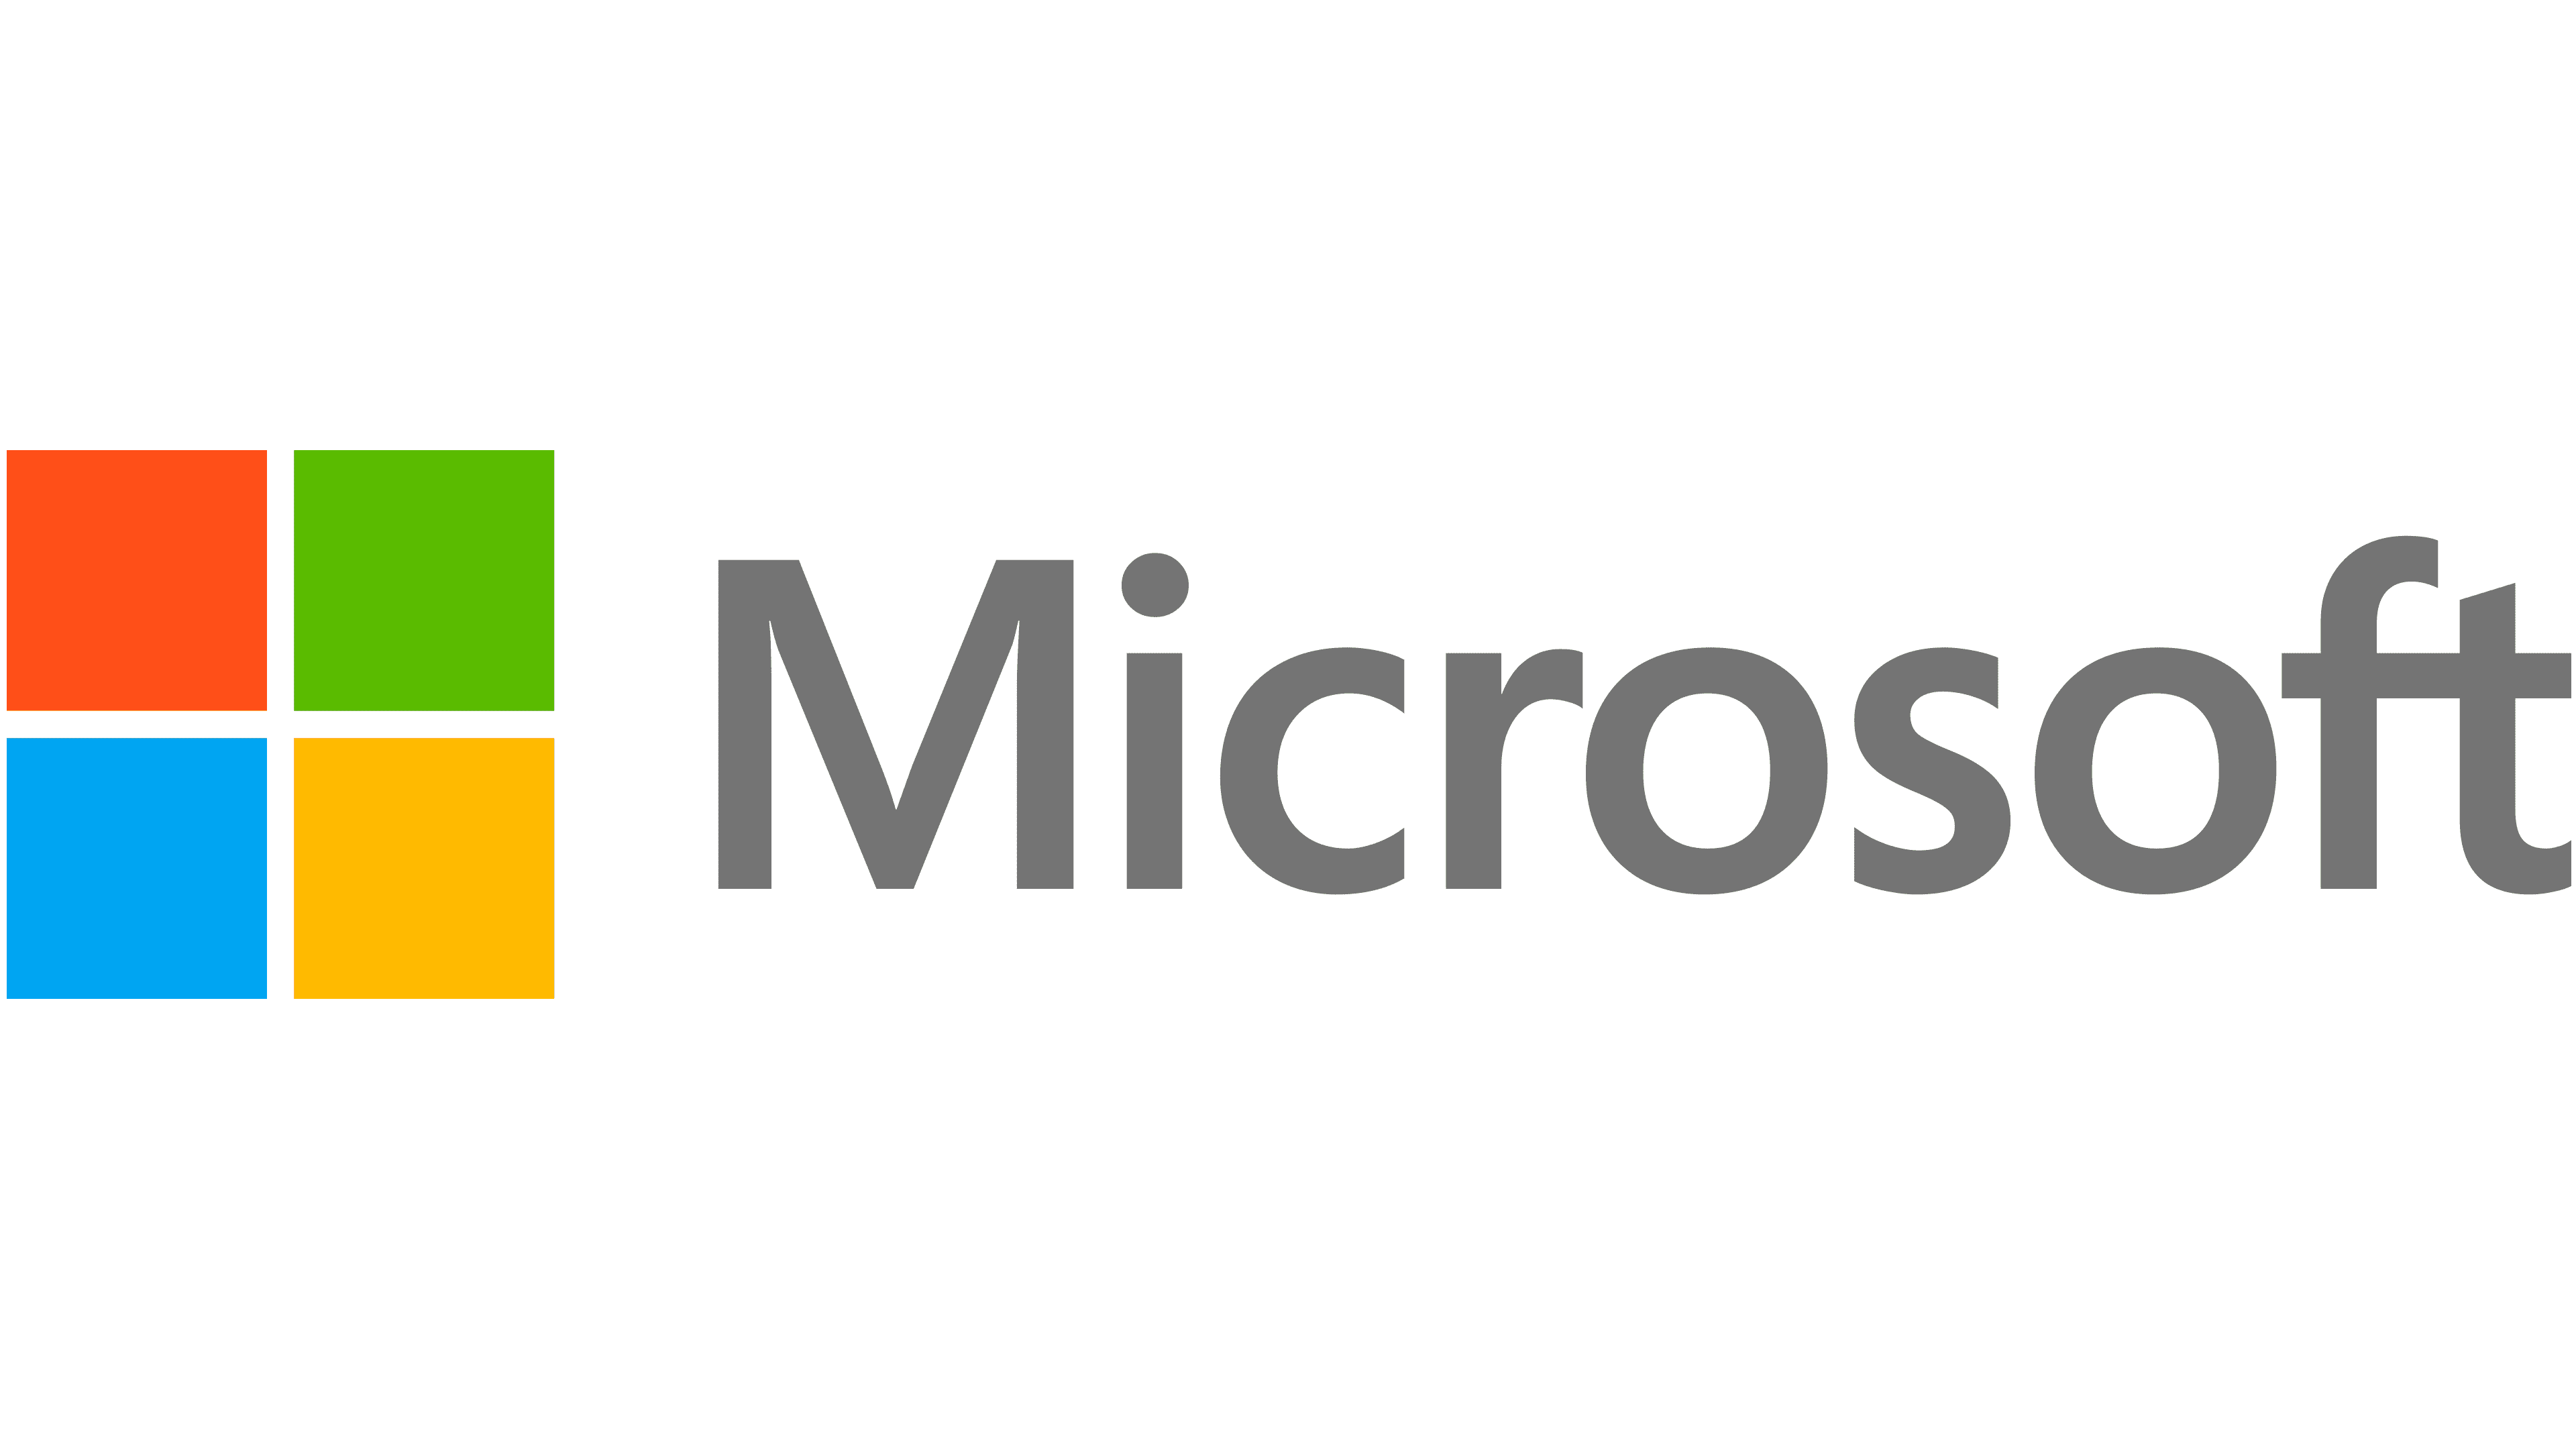 Microsoft jobs